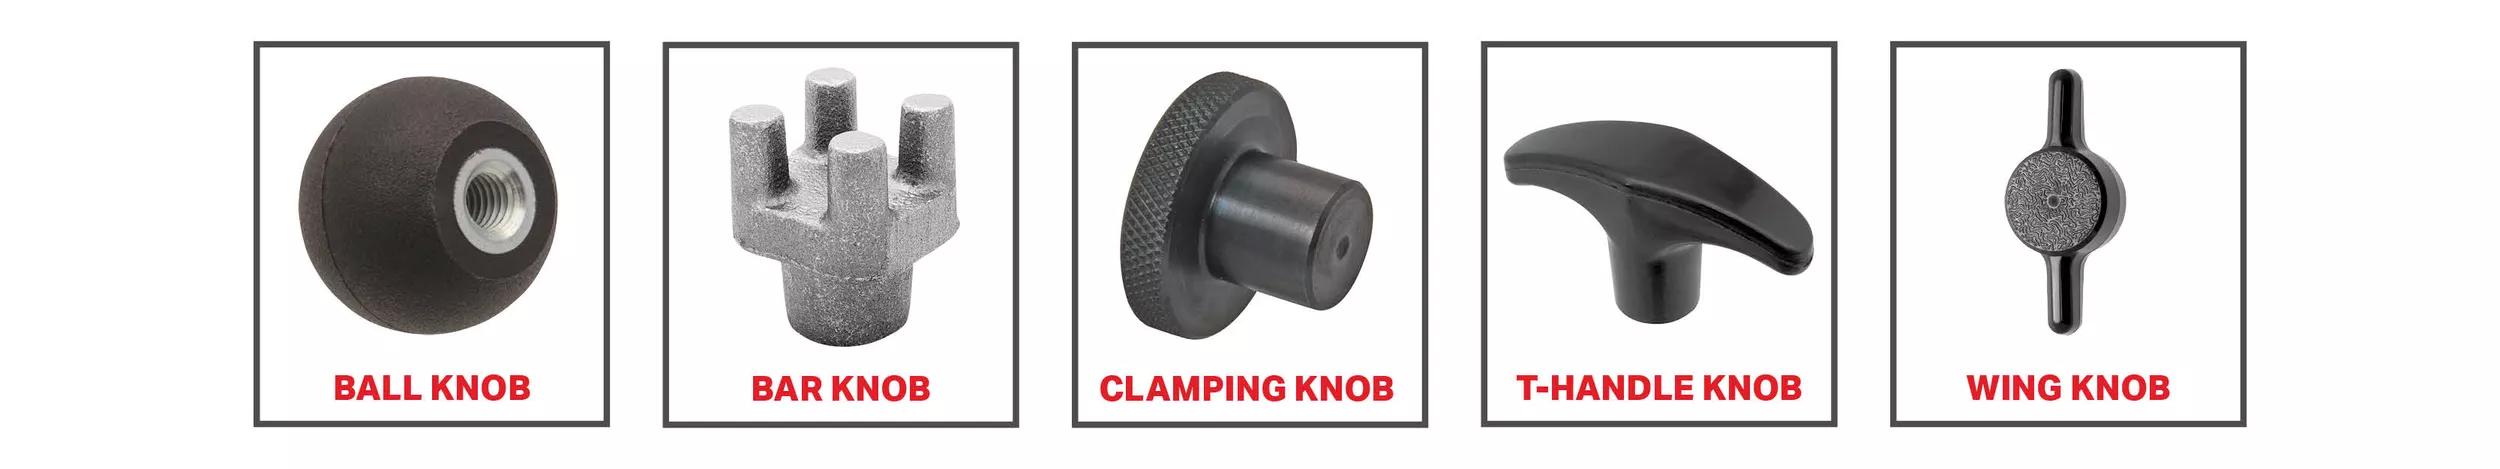 Types of Knobs